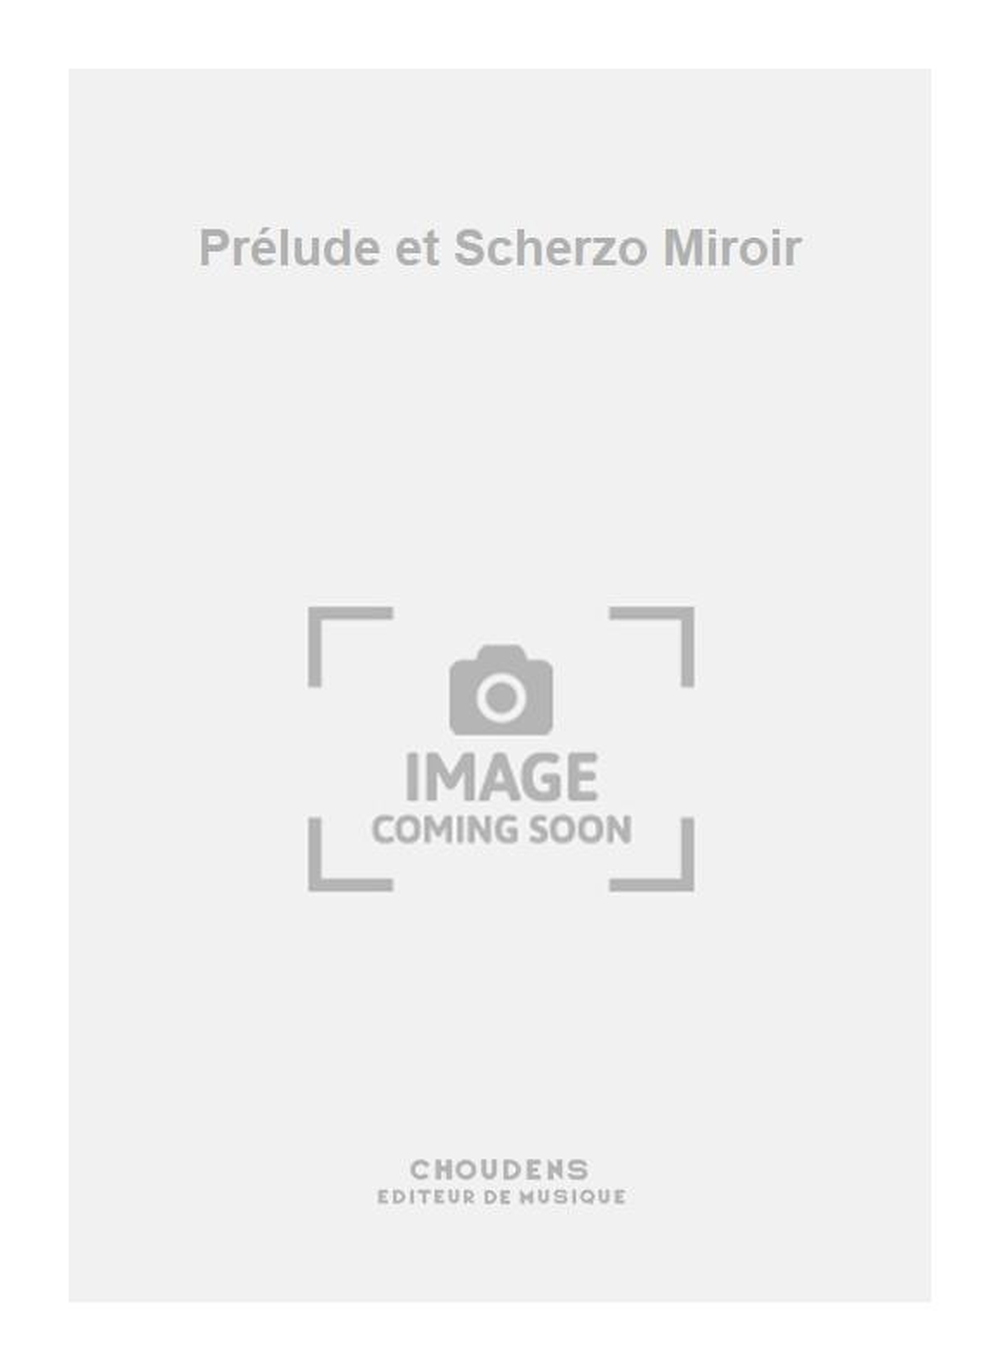 Prlude et Scherzo Miroir